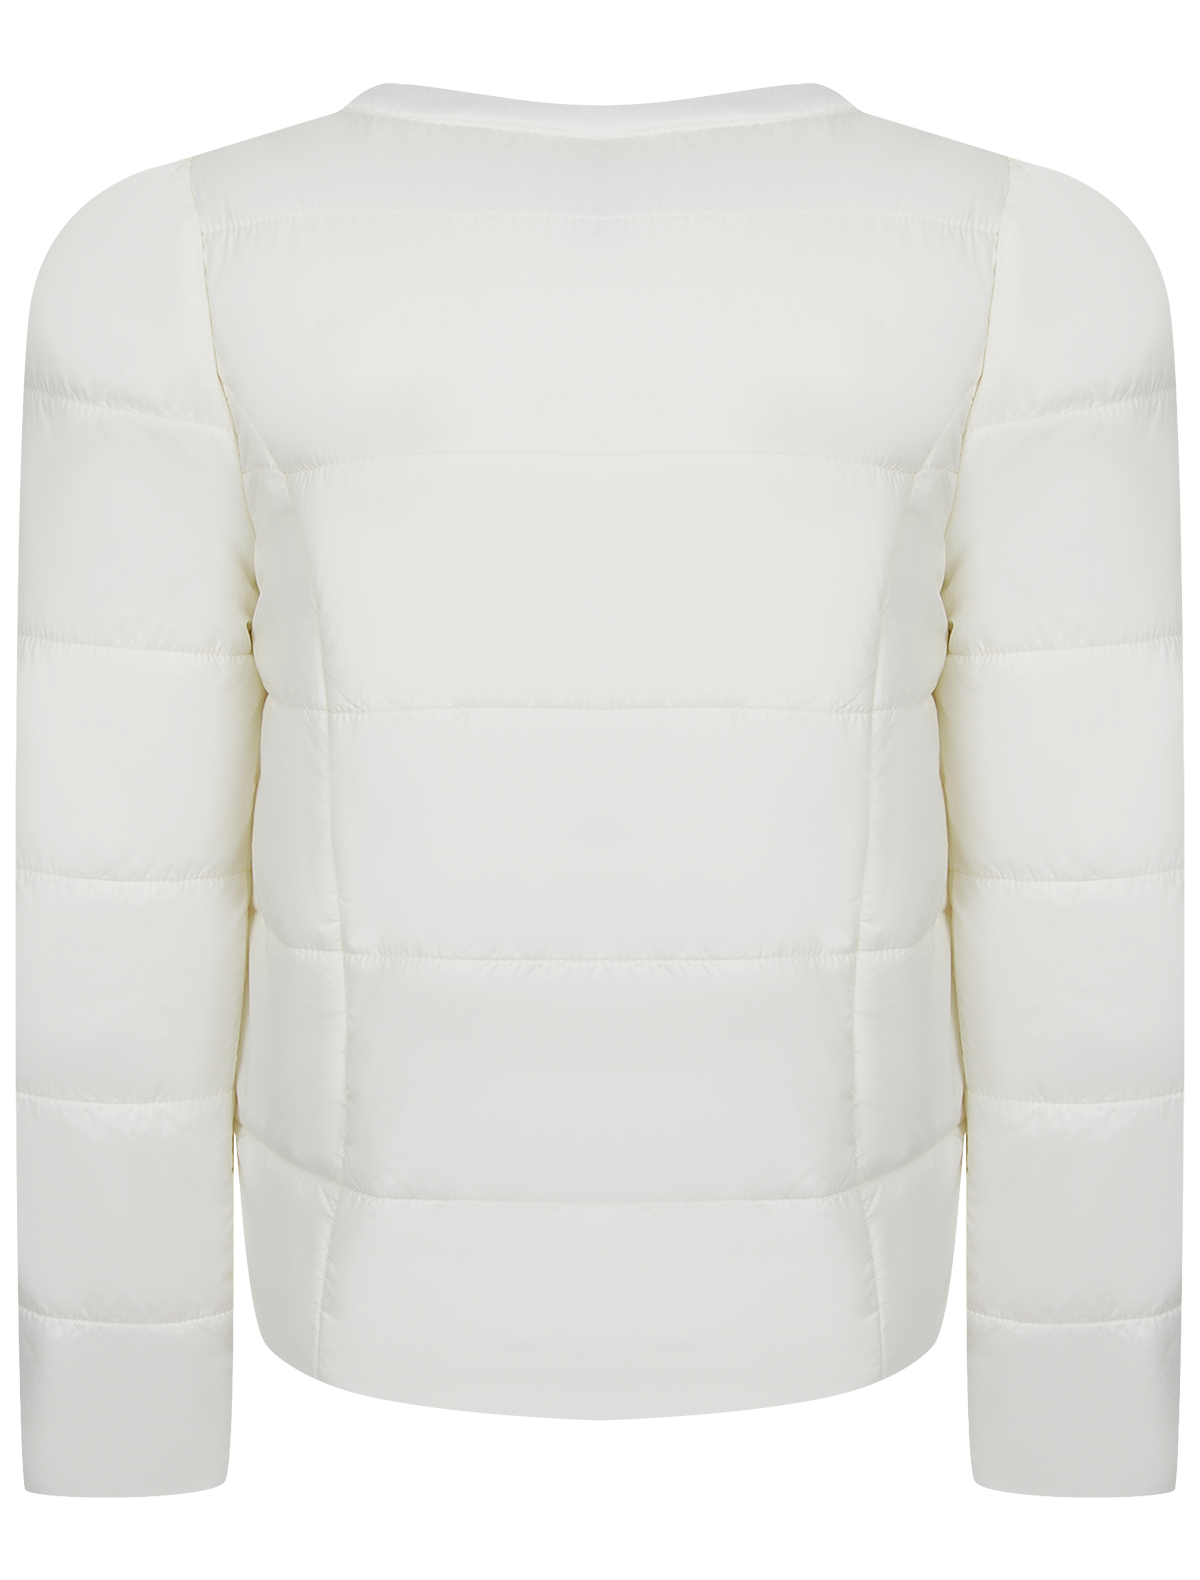 Куртка Mayoral 2665481, цвет белый, размер 3 1074509411833 - фото 5